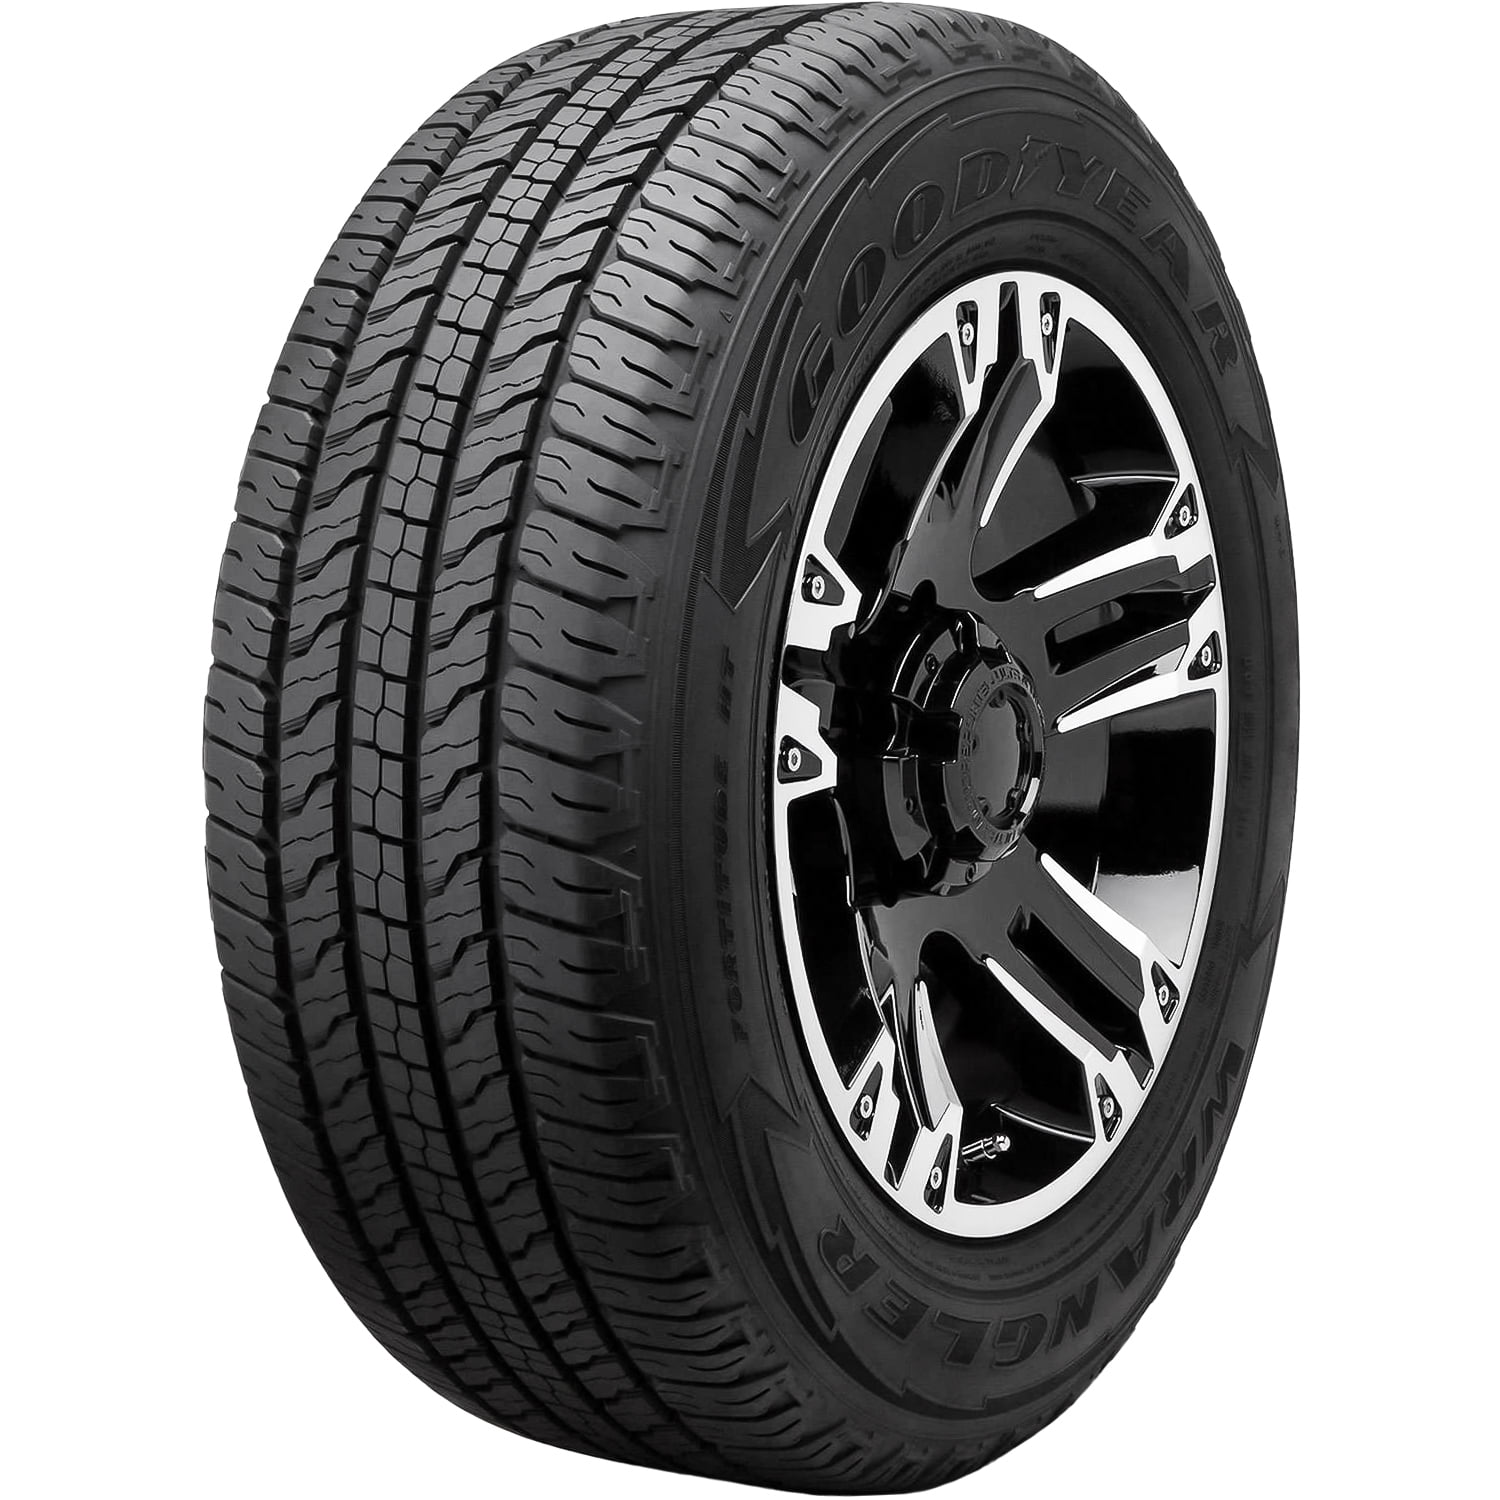 Goodyear Wrangler Fortitude HT 265/60R18 110T A/S All Season Tire